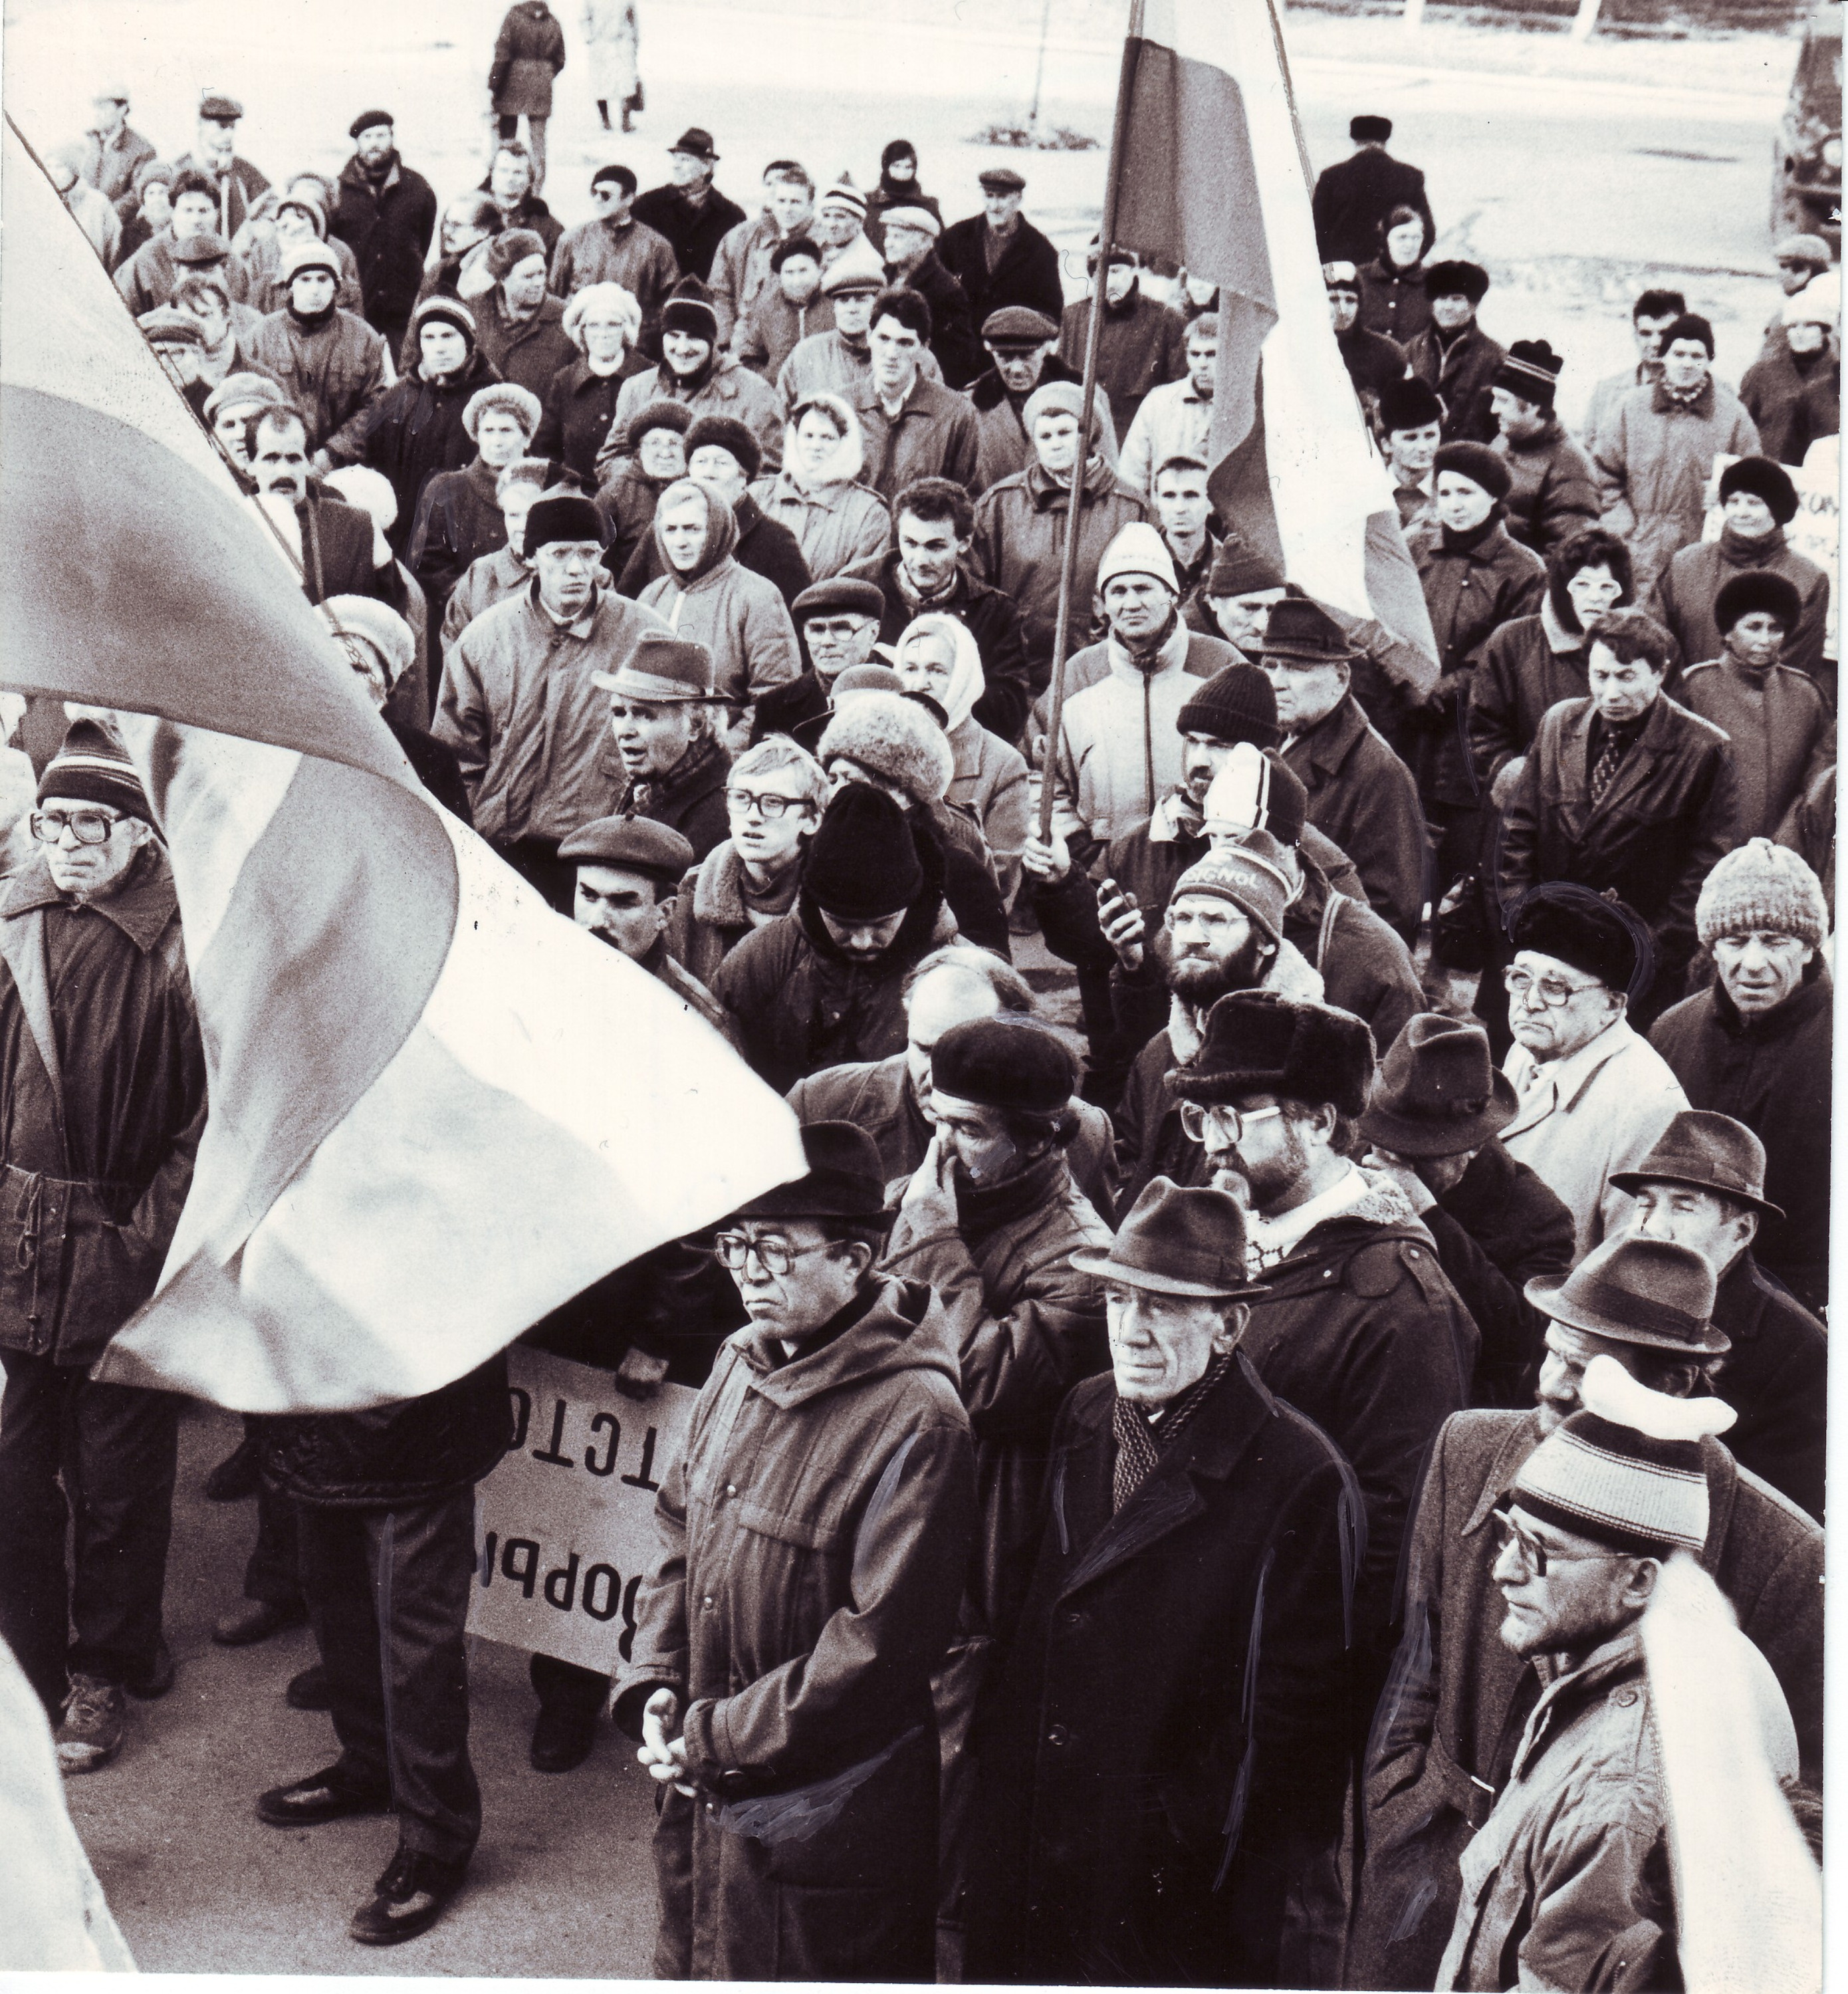 Митинг в поддержку ельцина 1990 фото